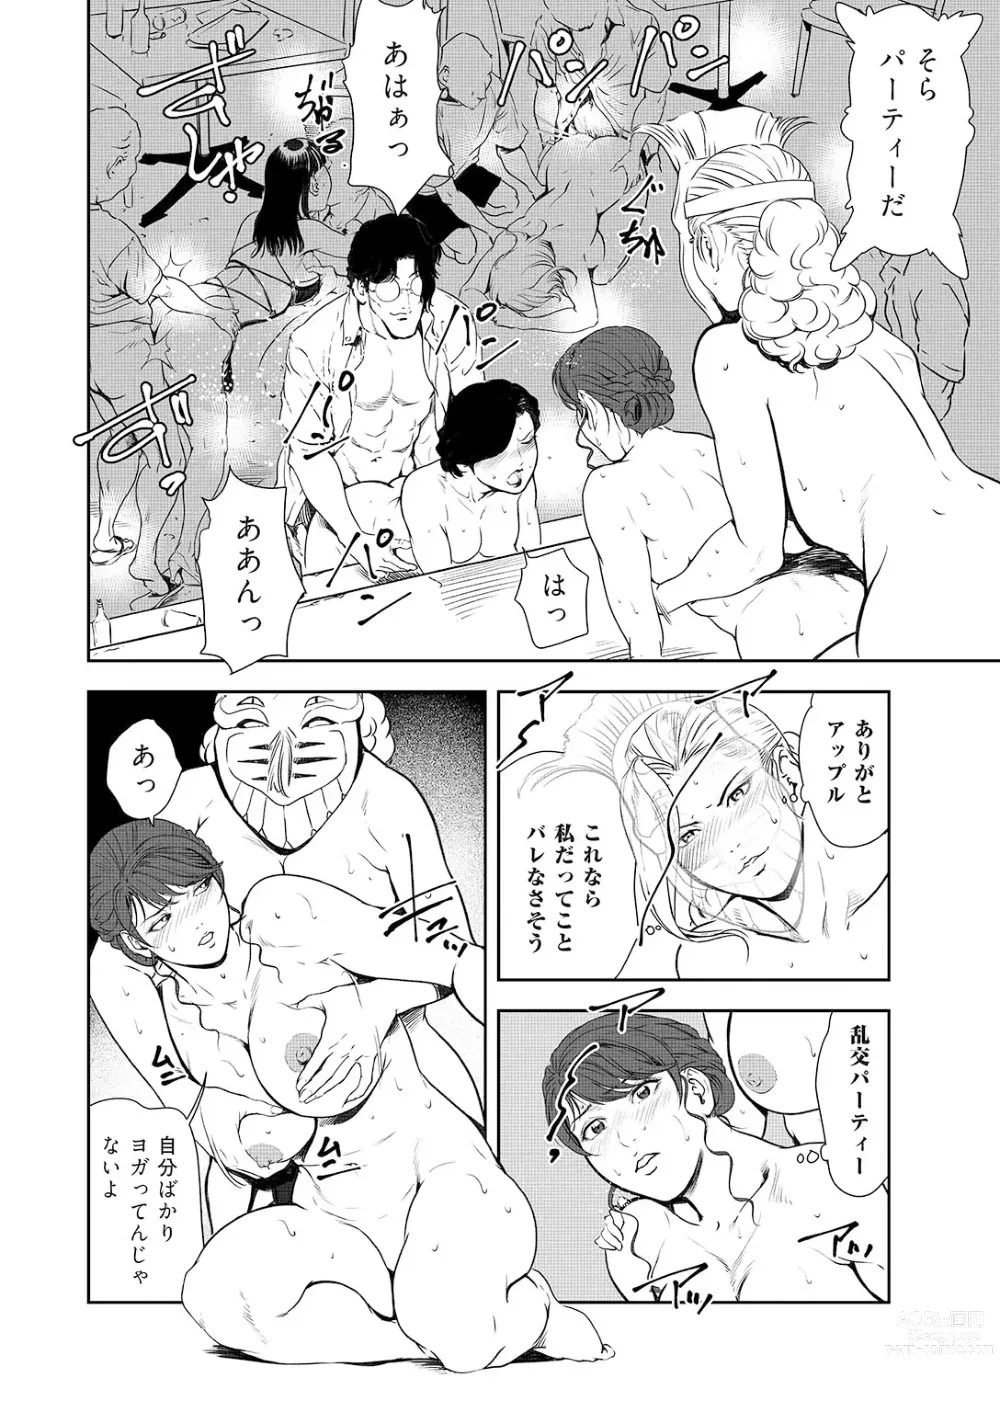 Page 71 of manga Nikuhisyo Yukiko 44